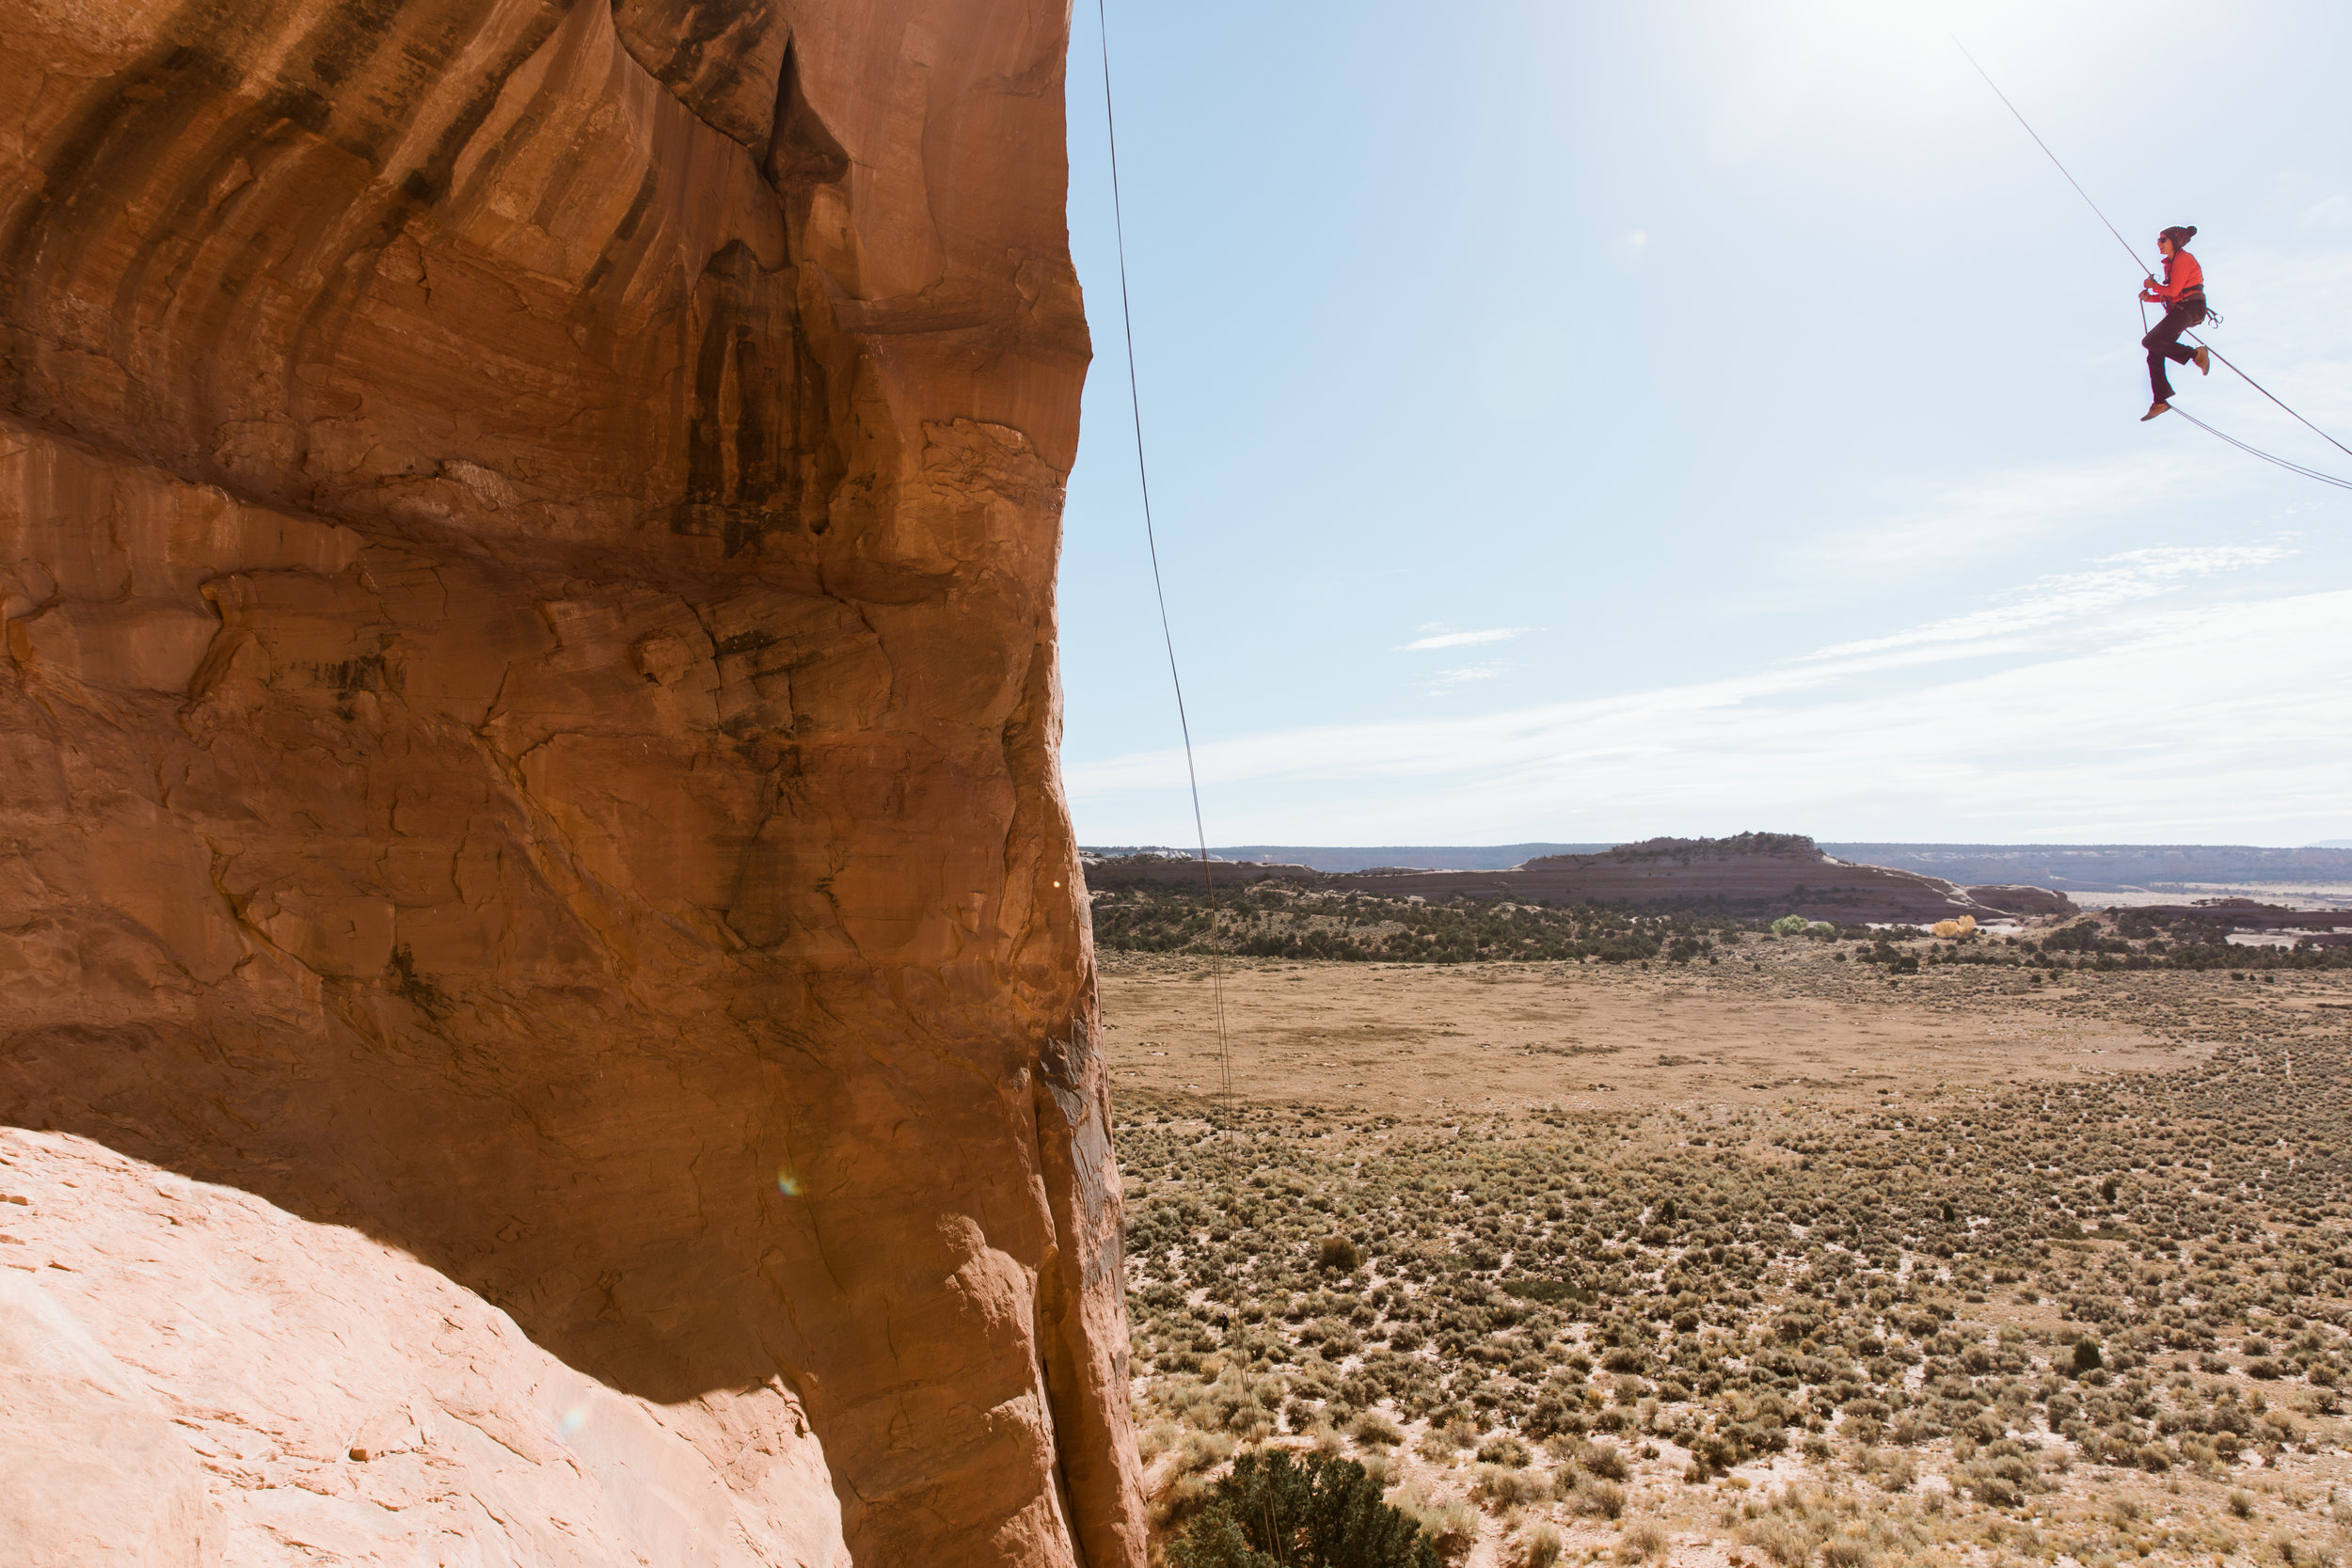 rock climbing in moab, utah // adventure lifestyle photographer // www.abbihearne.com